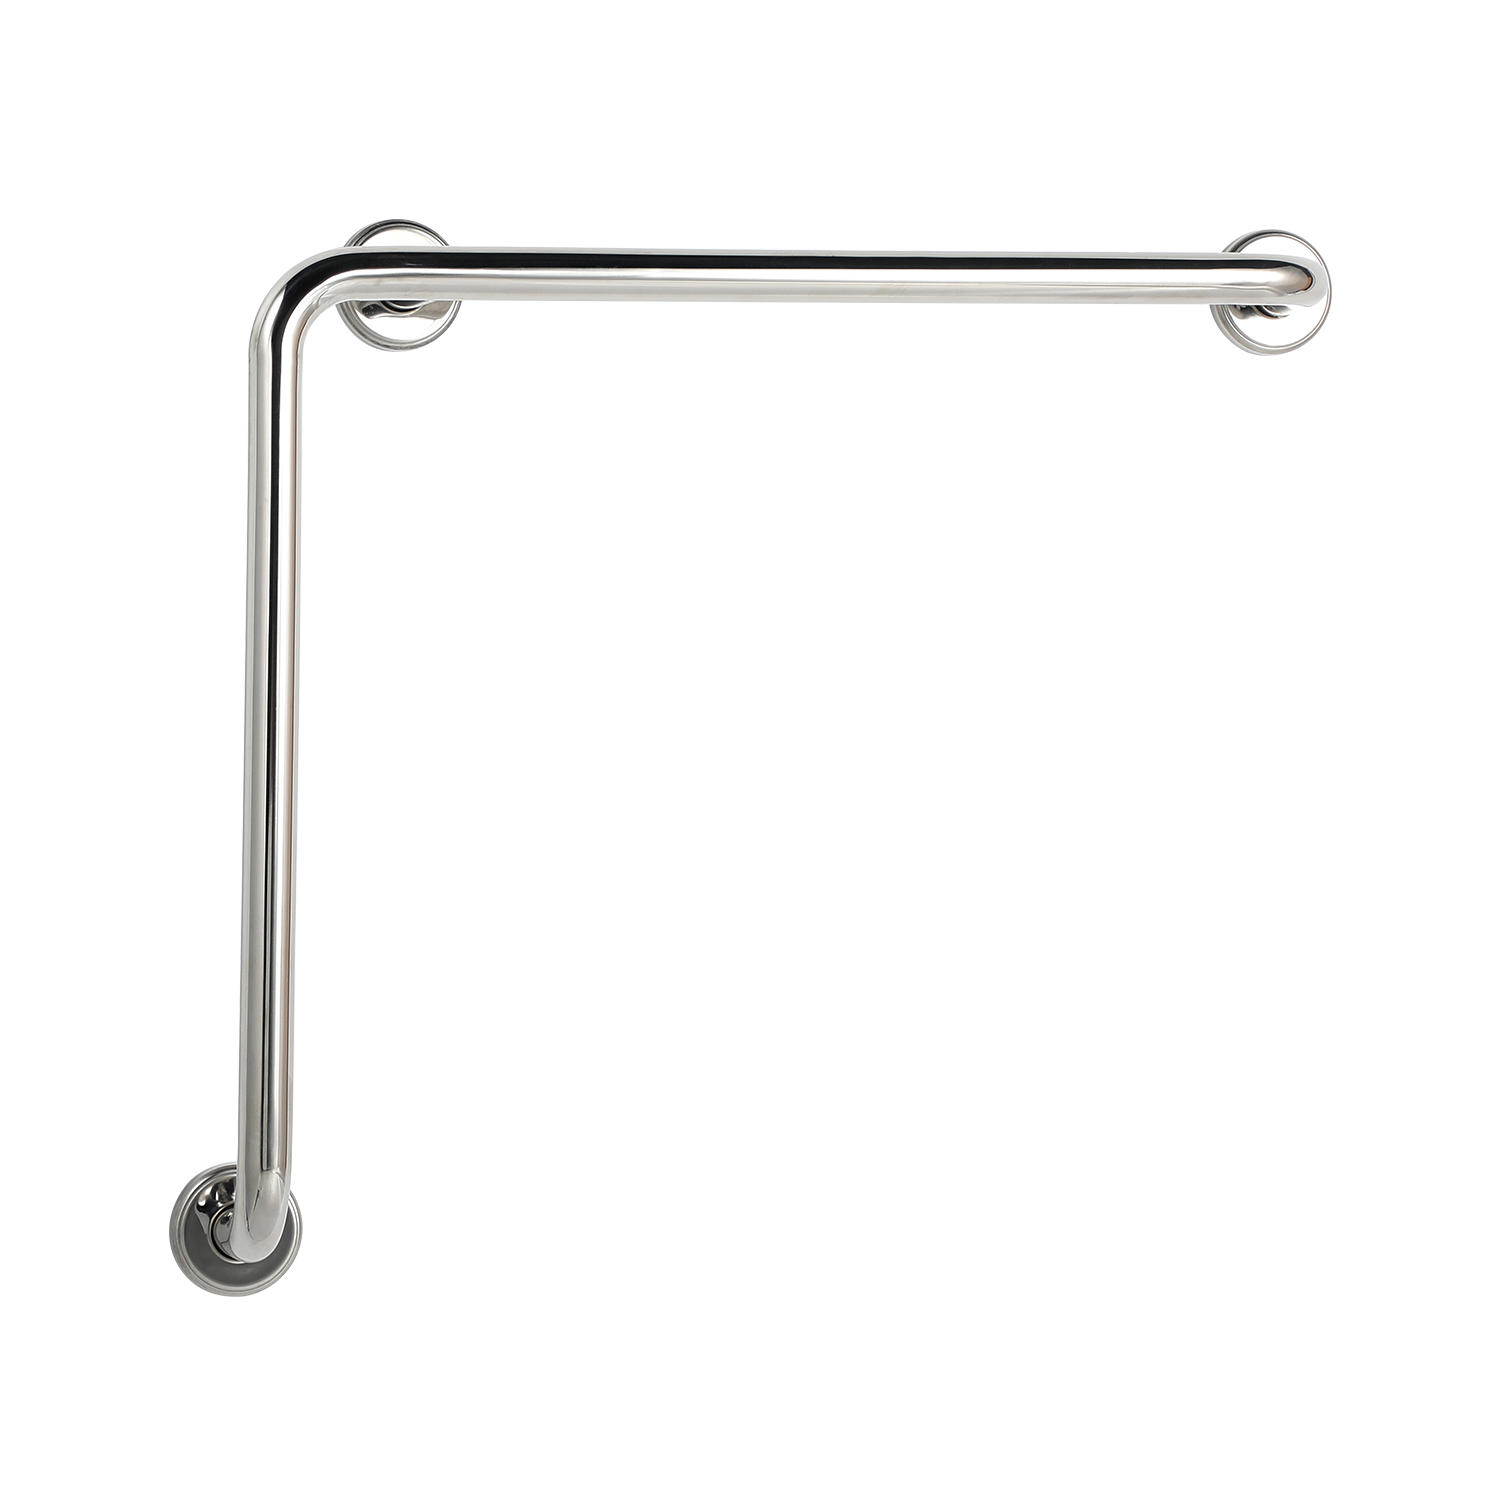 Stainless Steel Bathroom Handrail